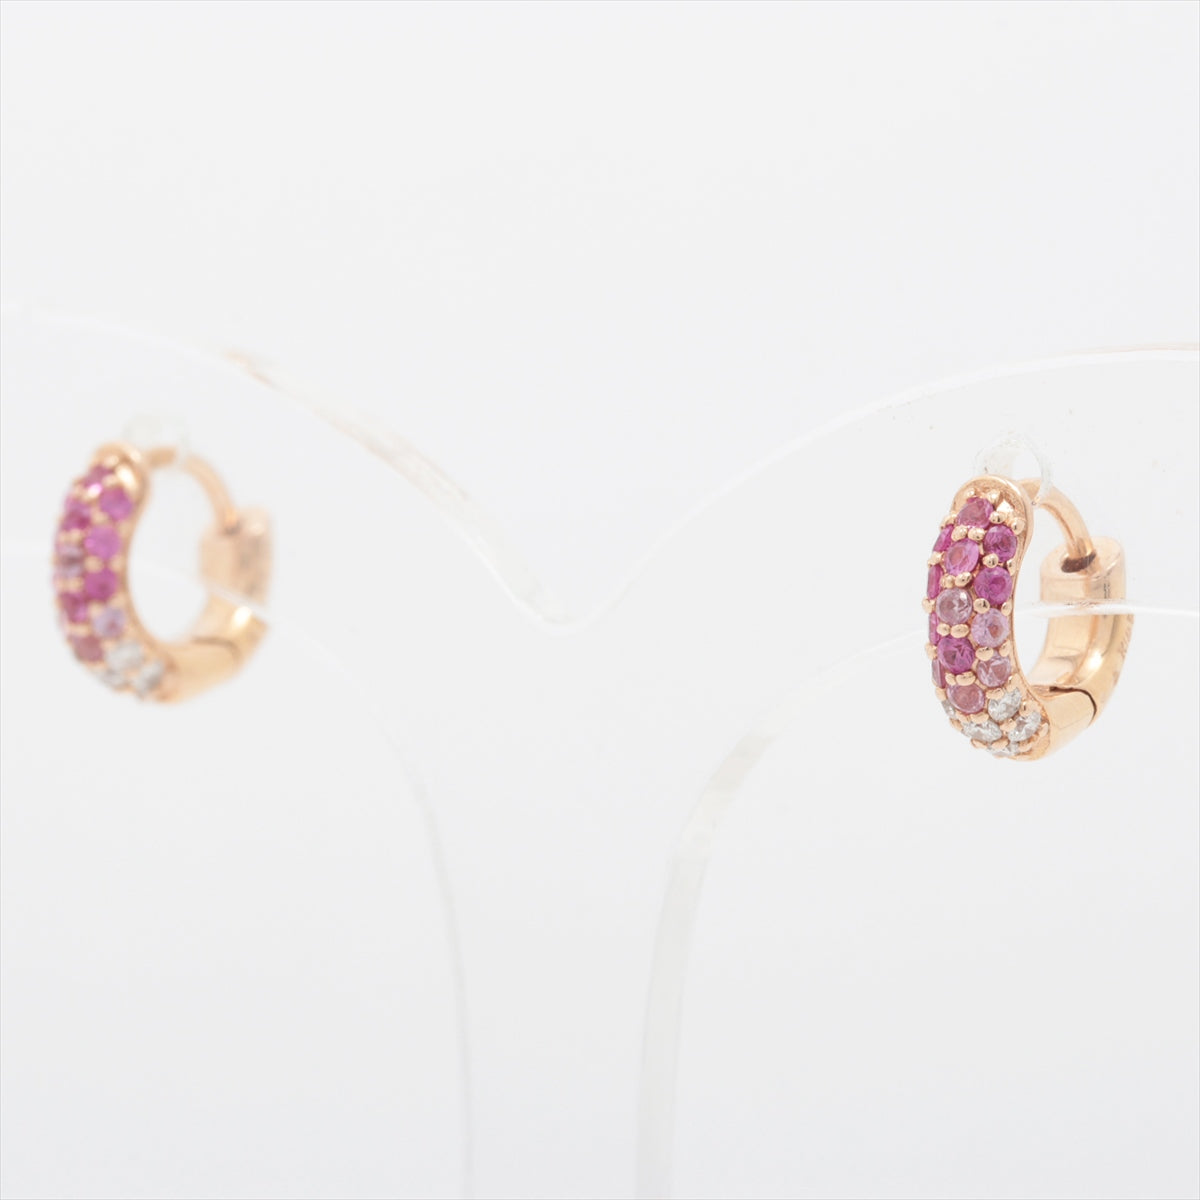 Ponte Vecchio diamond Sapphire Piercing jewelry K18PG 2.3g 0.05 S0.12 0.05 S0.12